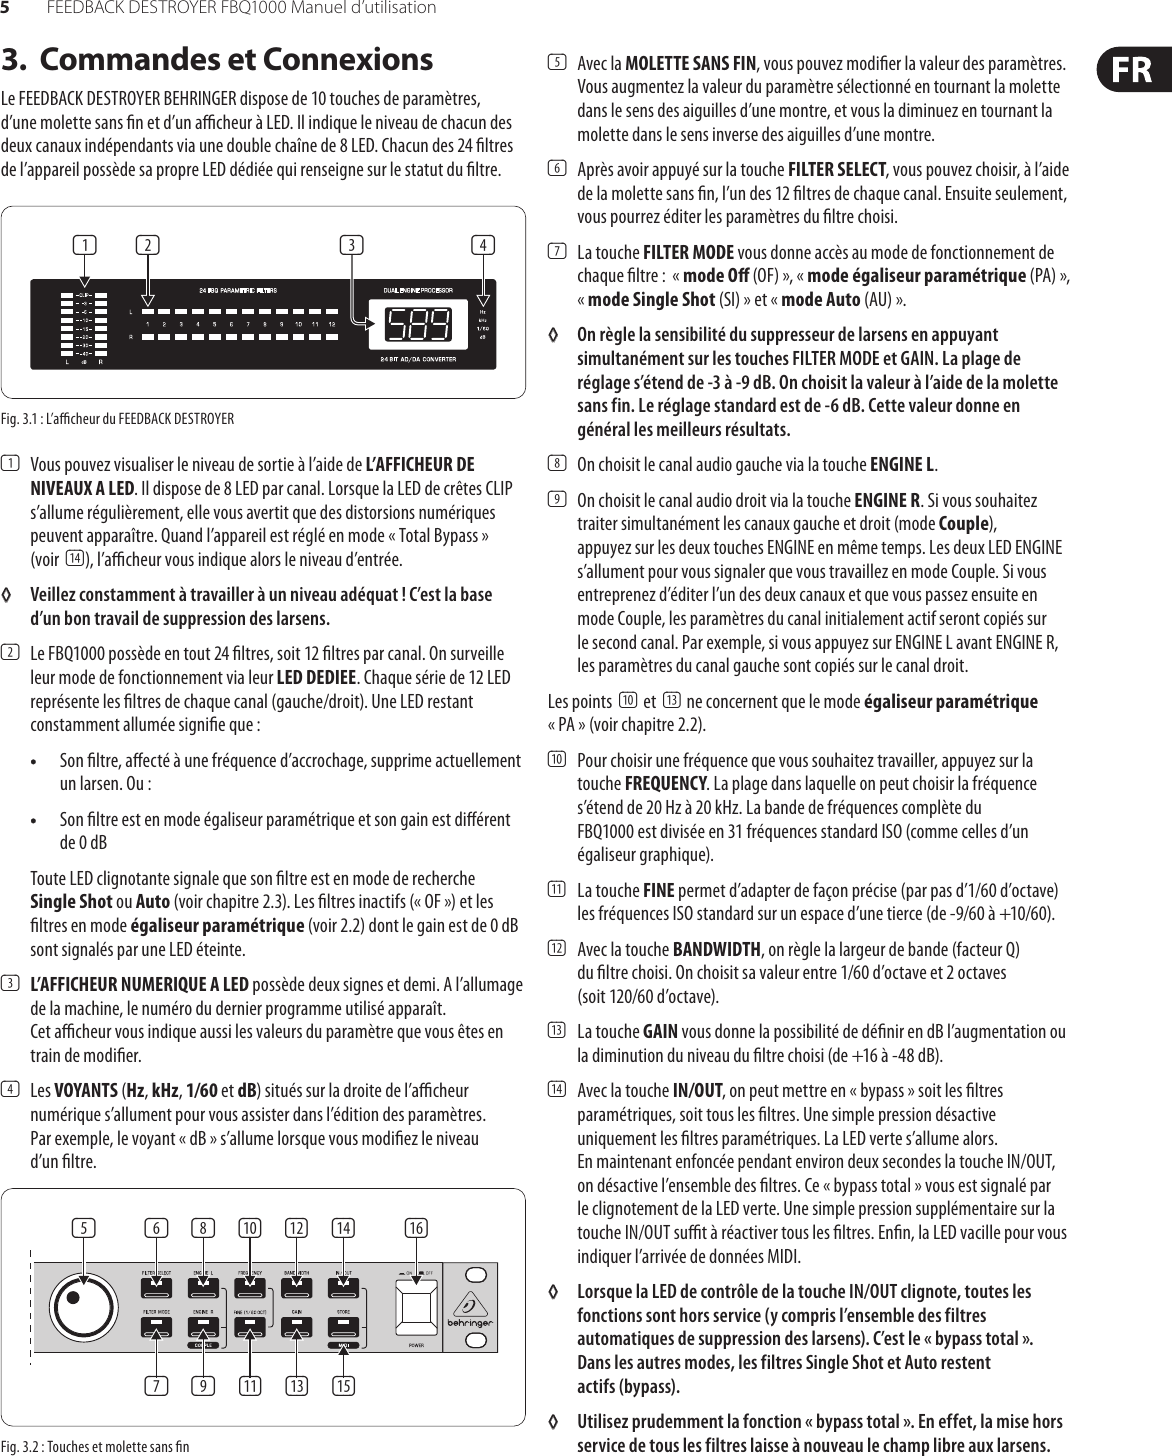 Page 5 of 12 - FEEDBACK DESTROYER FBQ1000 Behringer User Manual (French) P0A3R M FR